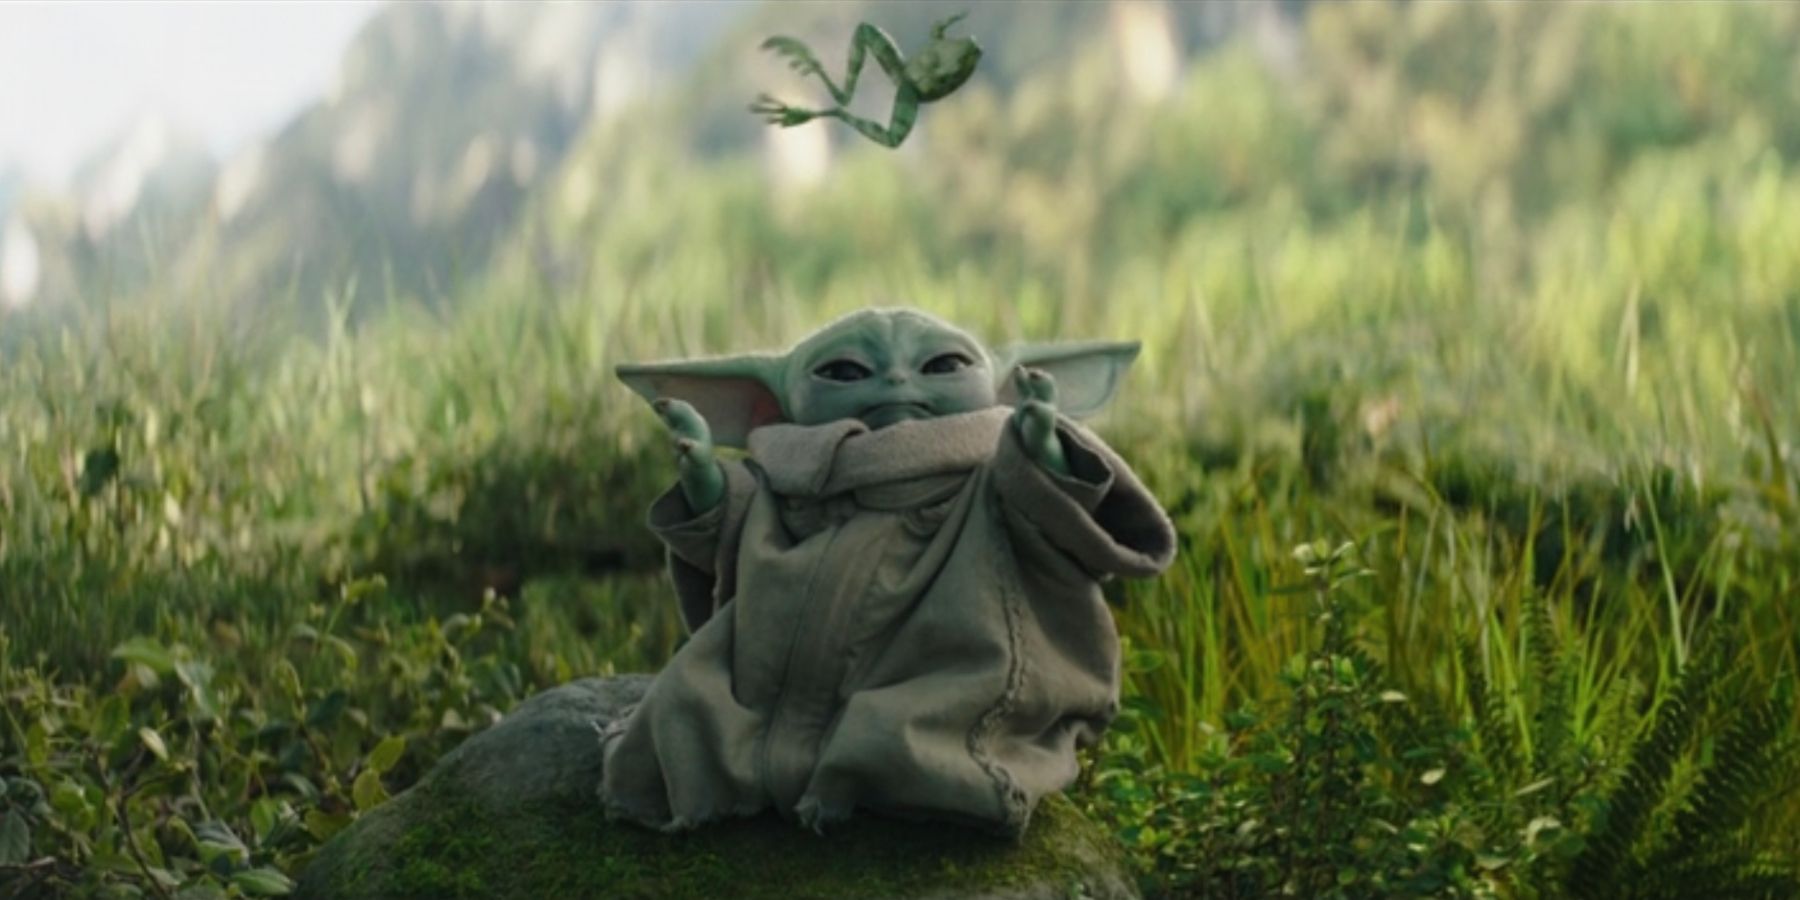 The Mandalorian Grogu Baby Yoda using force in grass field in The Book of Boba Fett